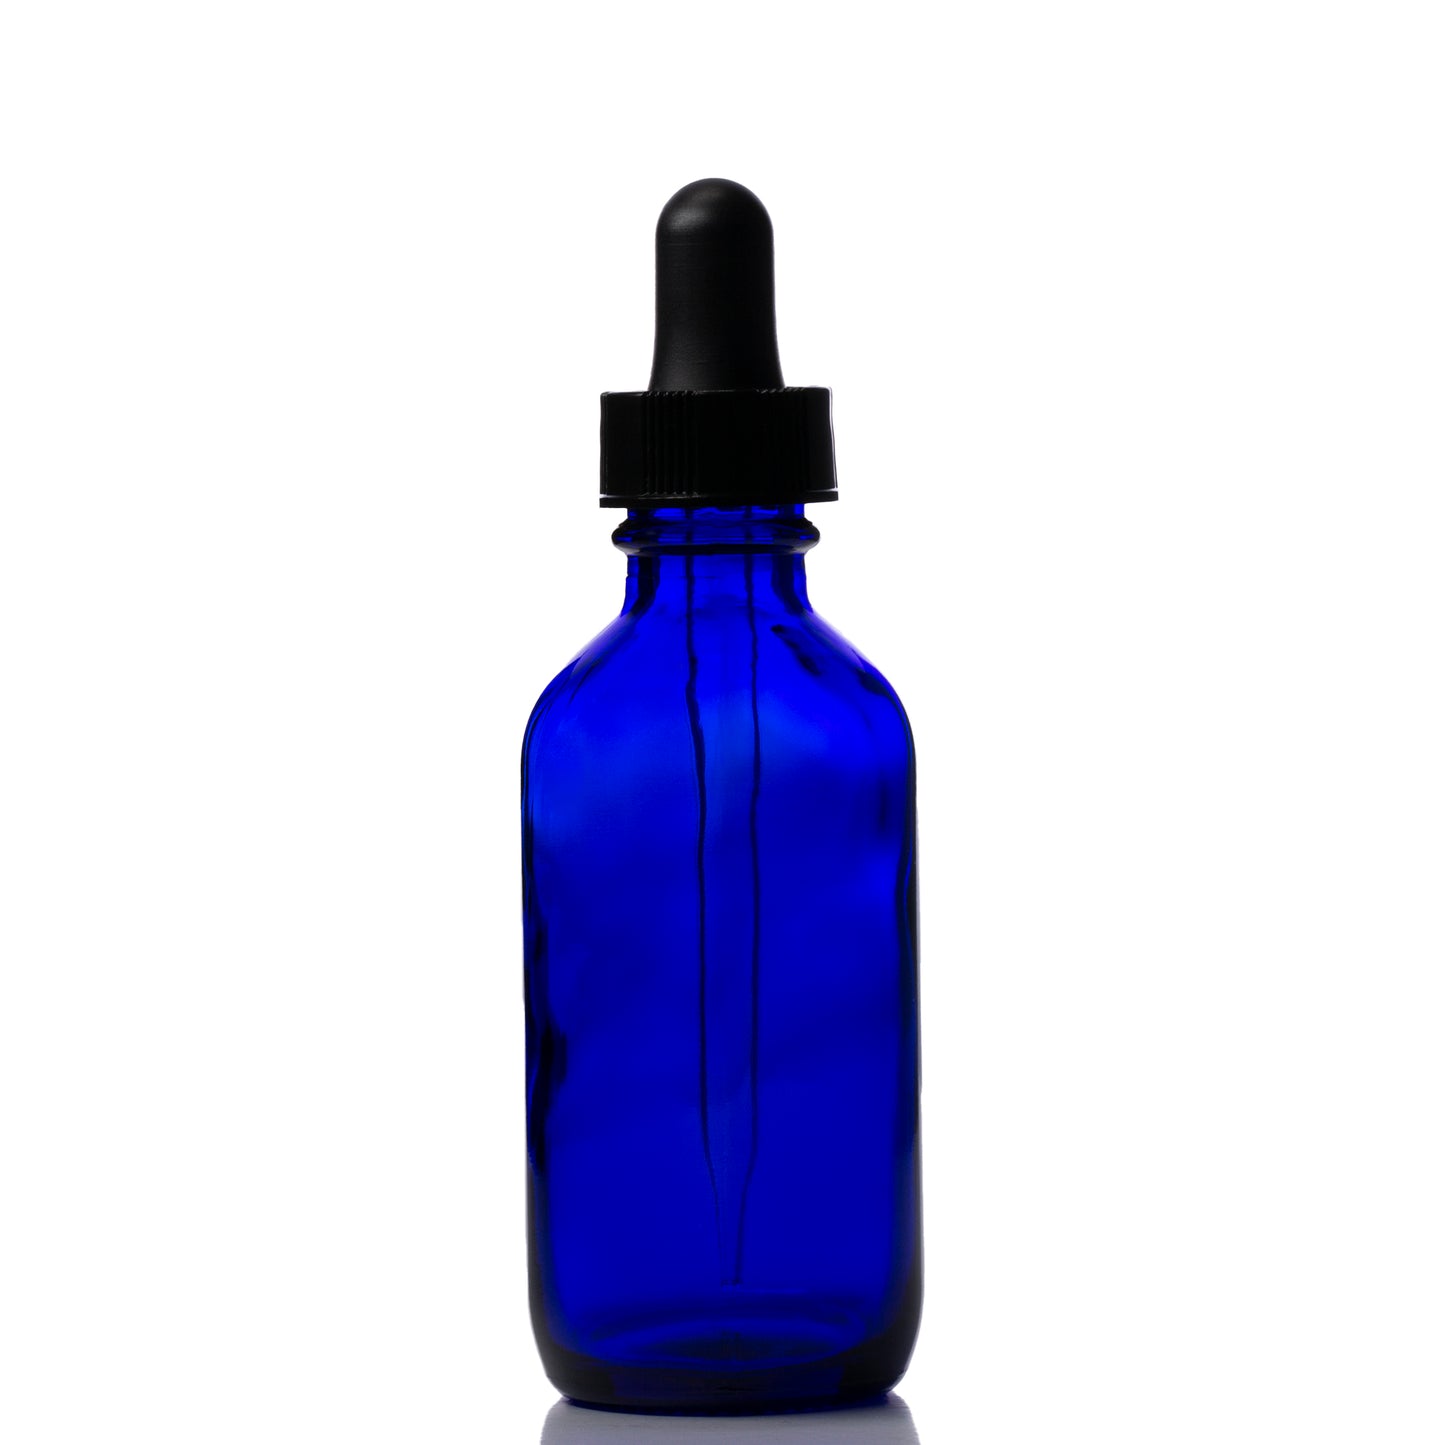 2 oz Blue Glass Boston Round Bottle with 60 ml Glass Tube Dropper